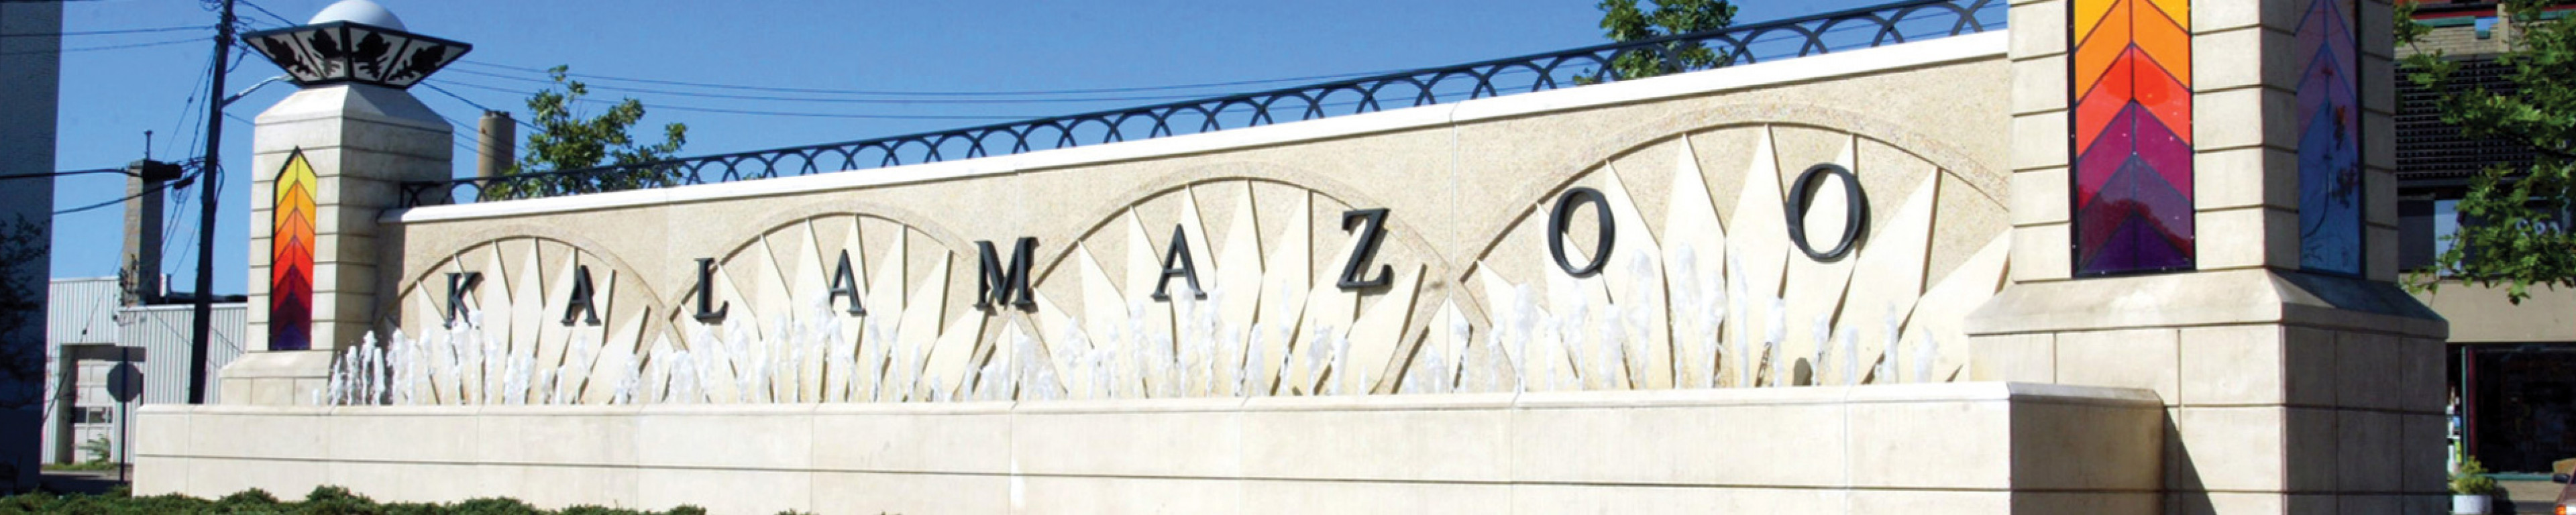 Kalamazoo gateway